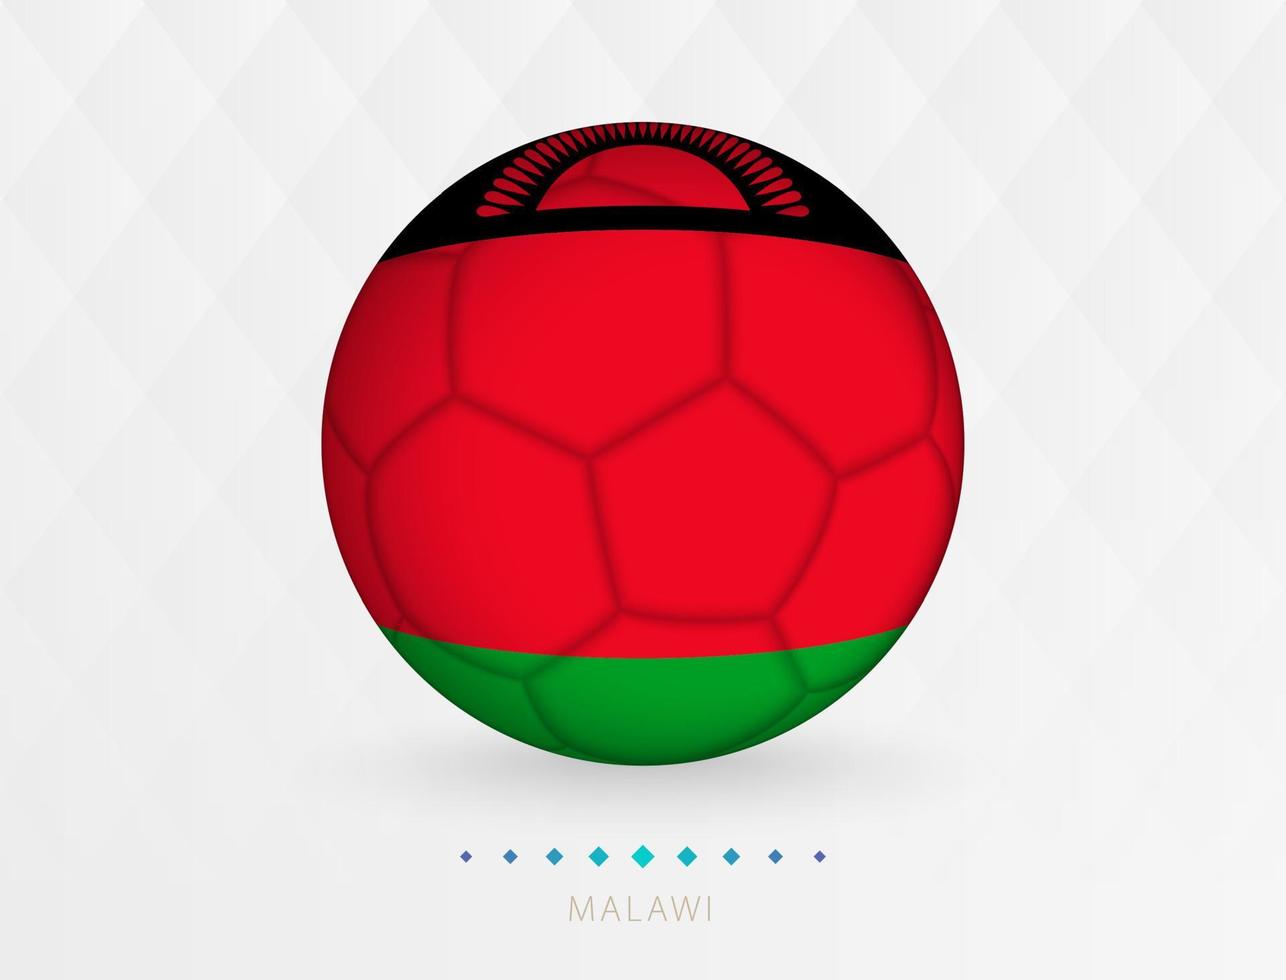 ballon de football avec motif drapeau malawi, ballon de football avec drapeau de l'équipe nationale malawi. vecteur